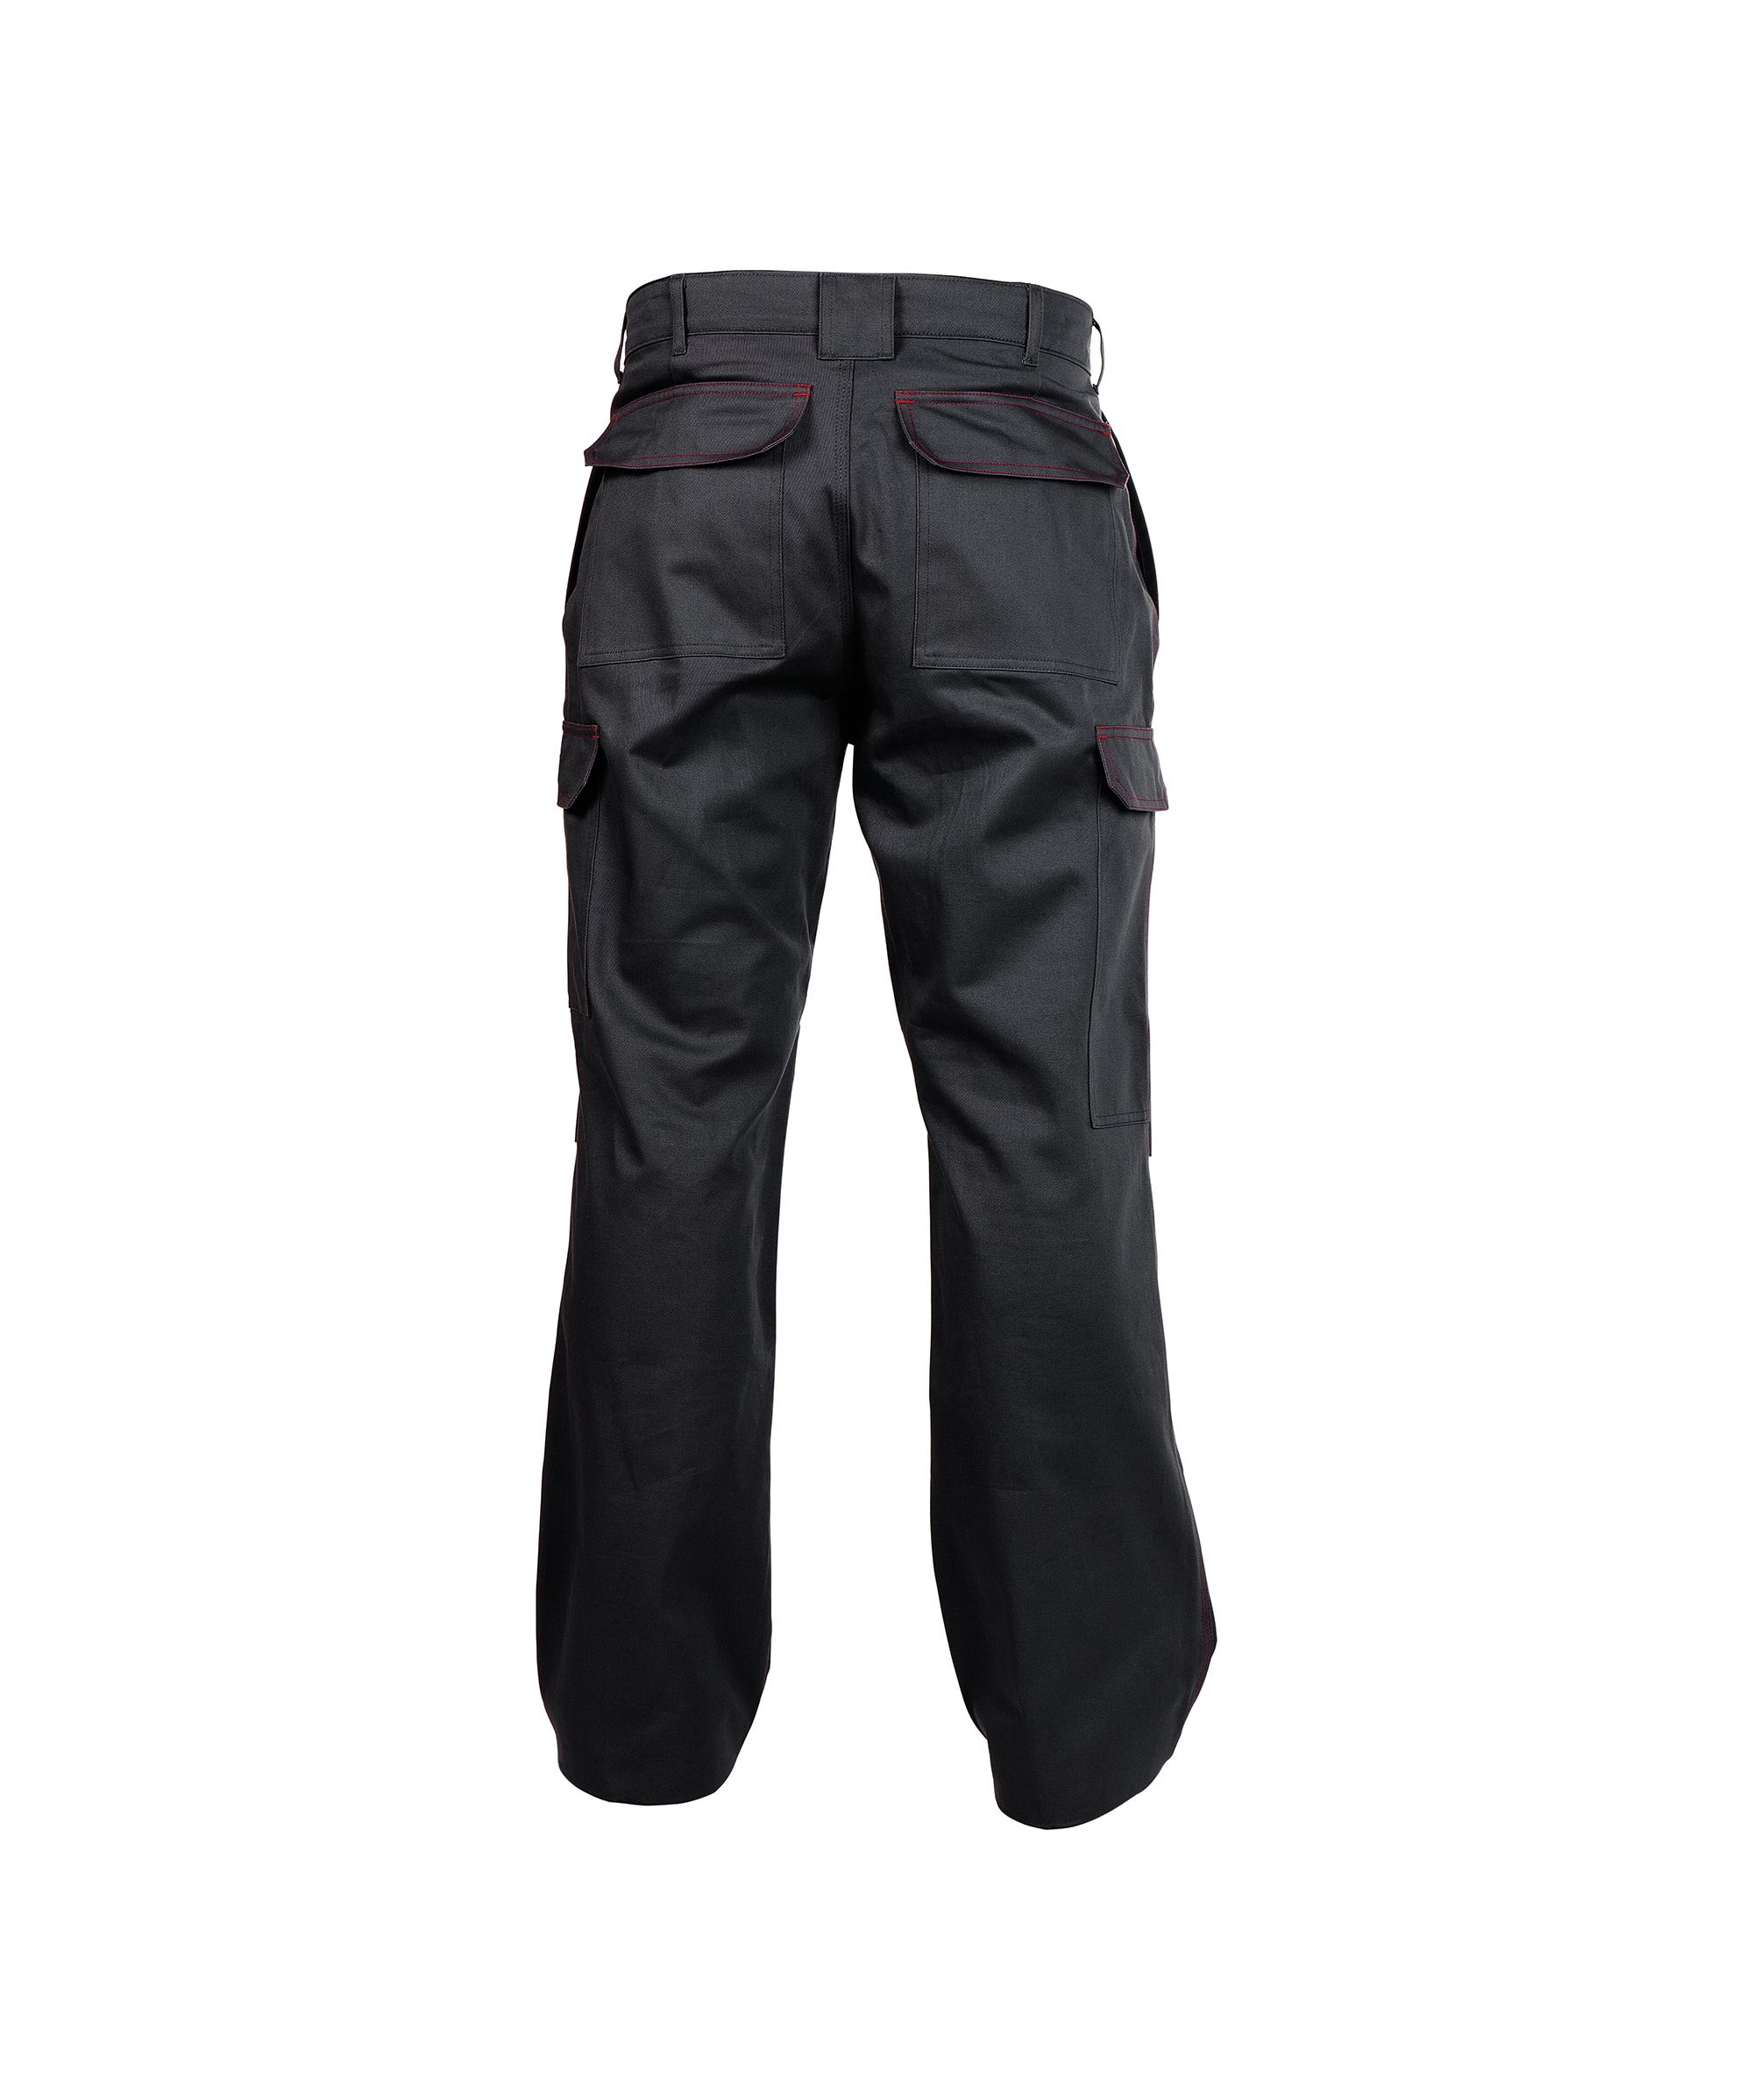 arizona_flame-retardant-work-trousers-with-knee-pockets_black_back.jpg